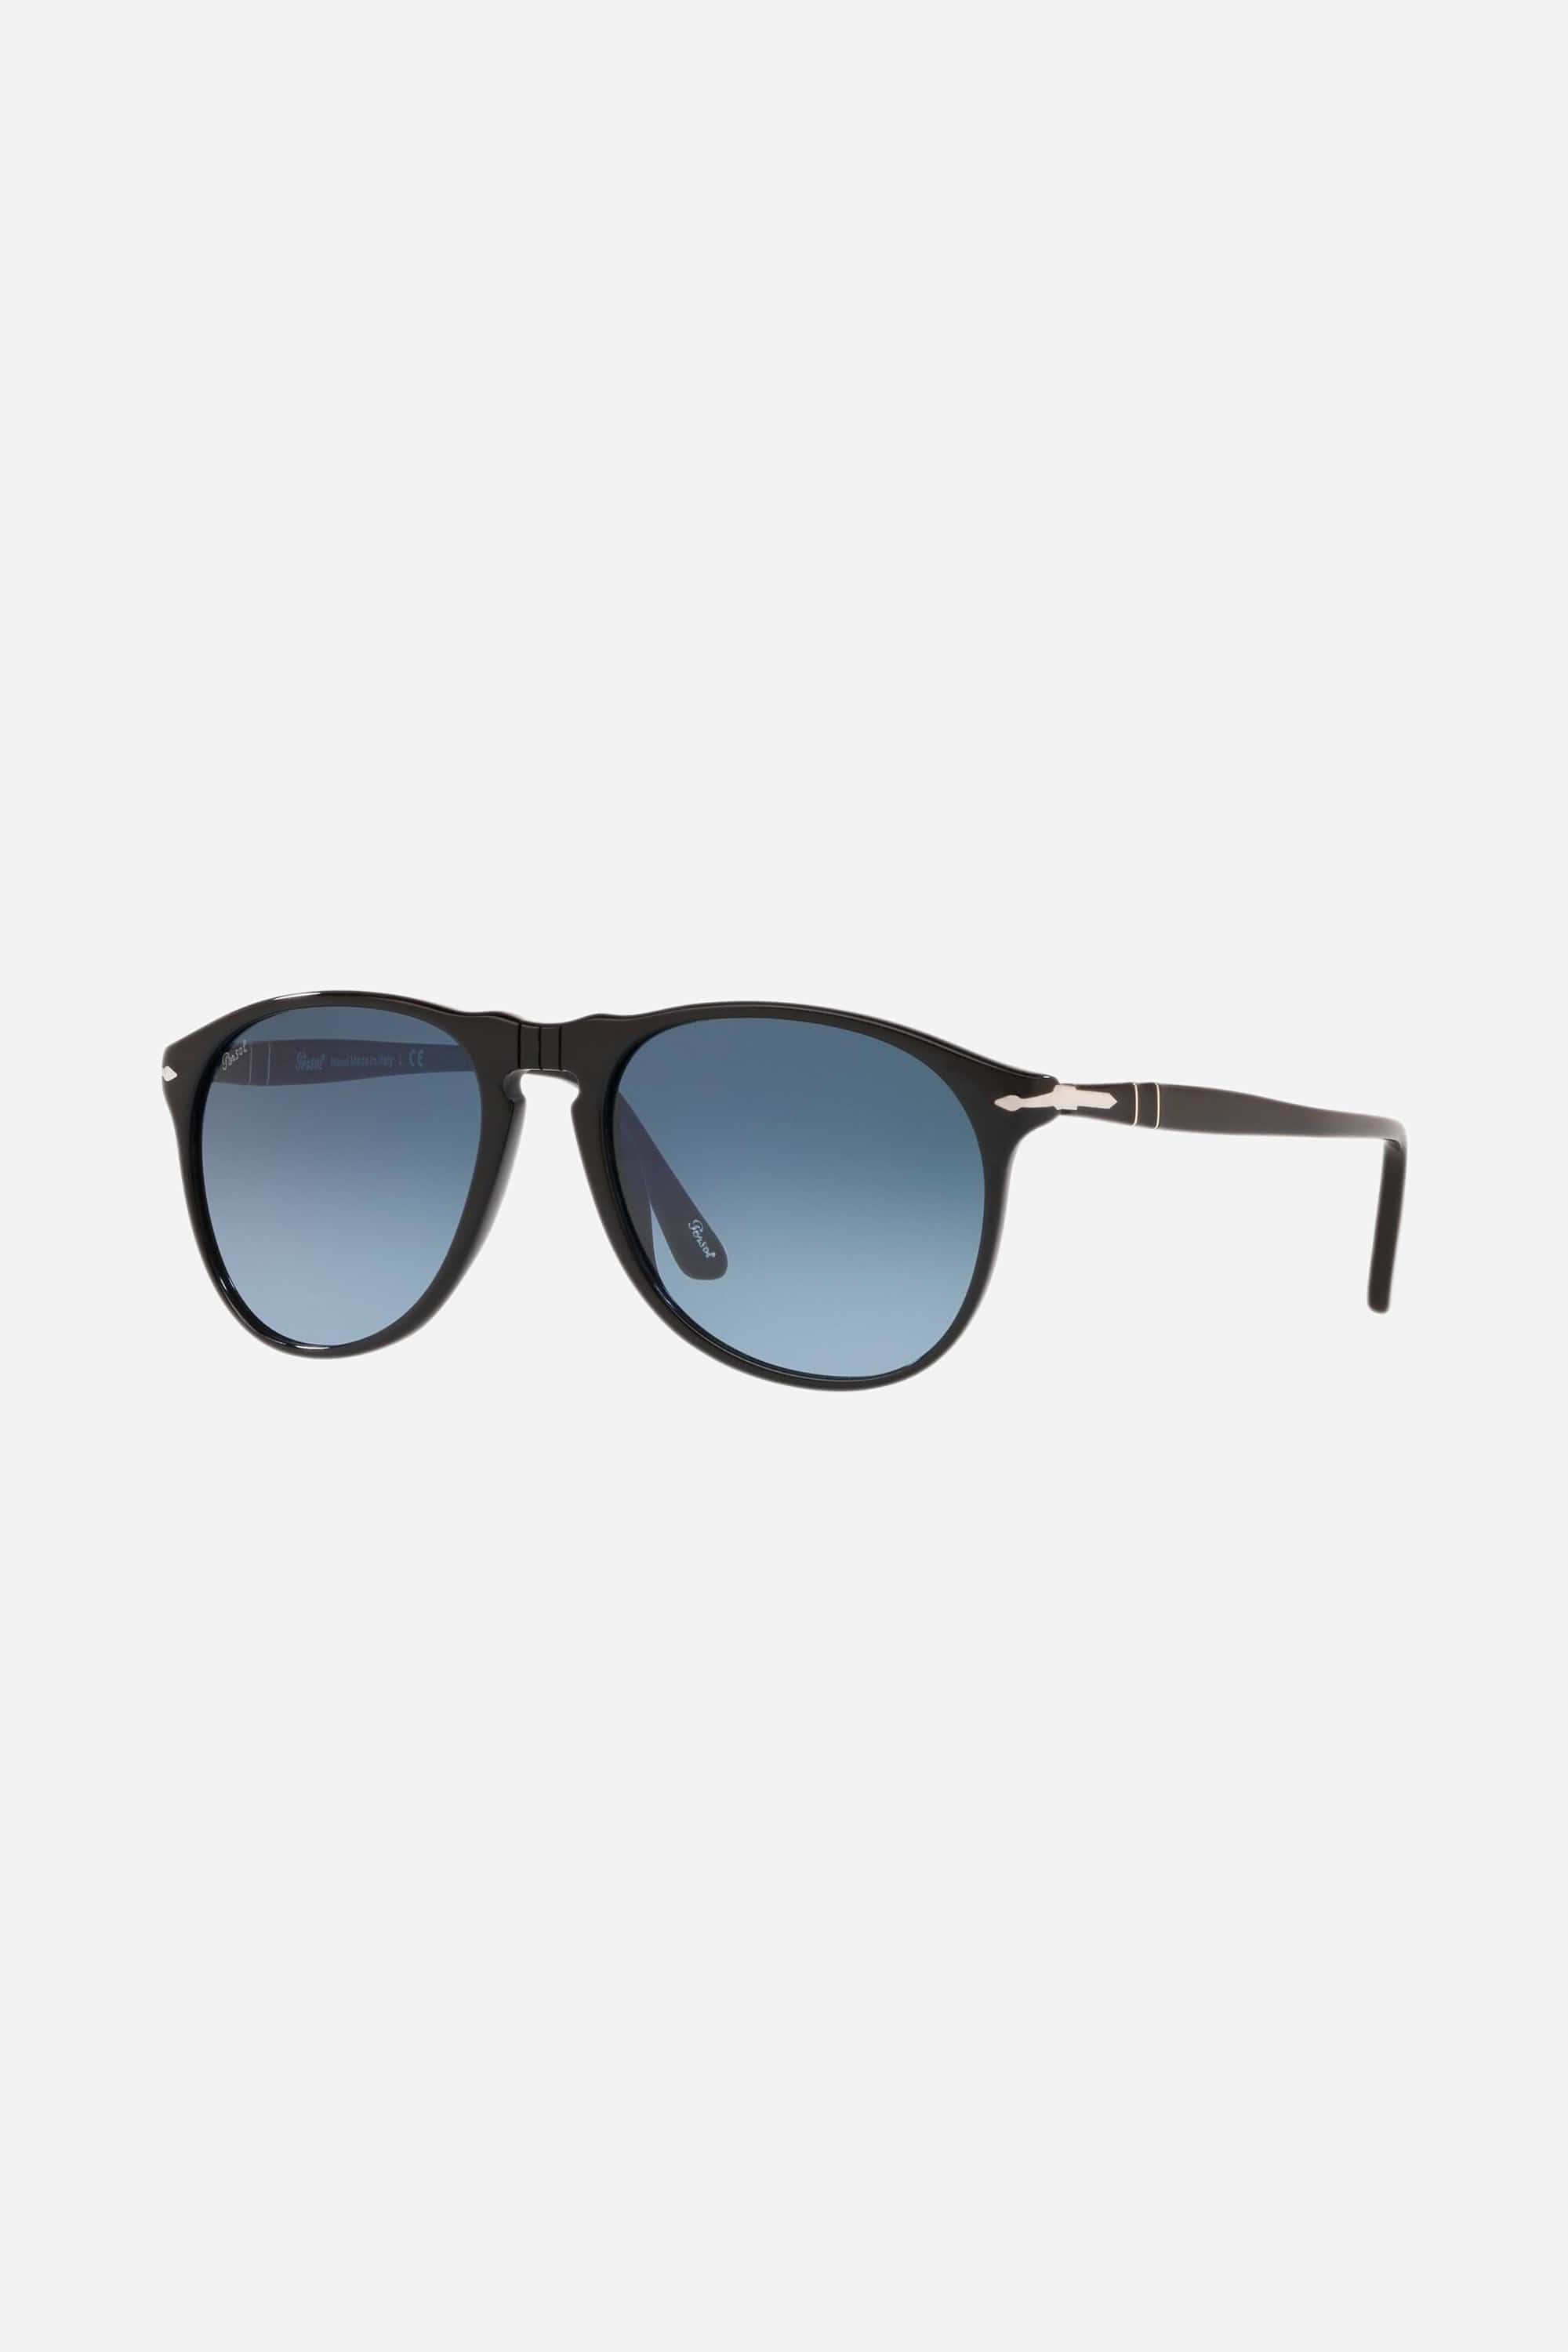 Persol pilot light black sunglasses - Eyewear Club